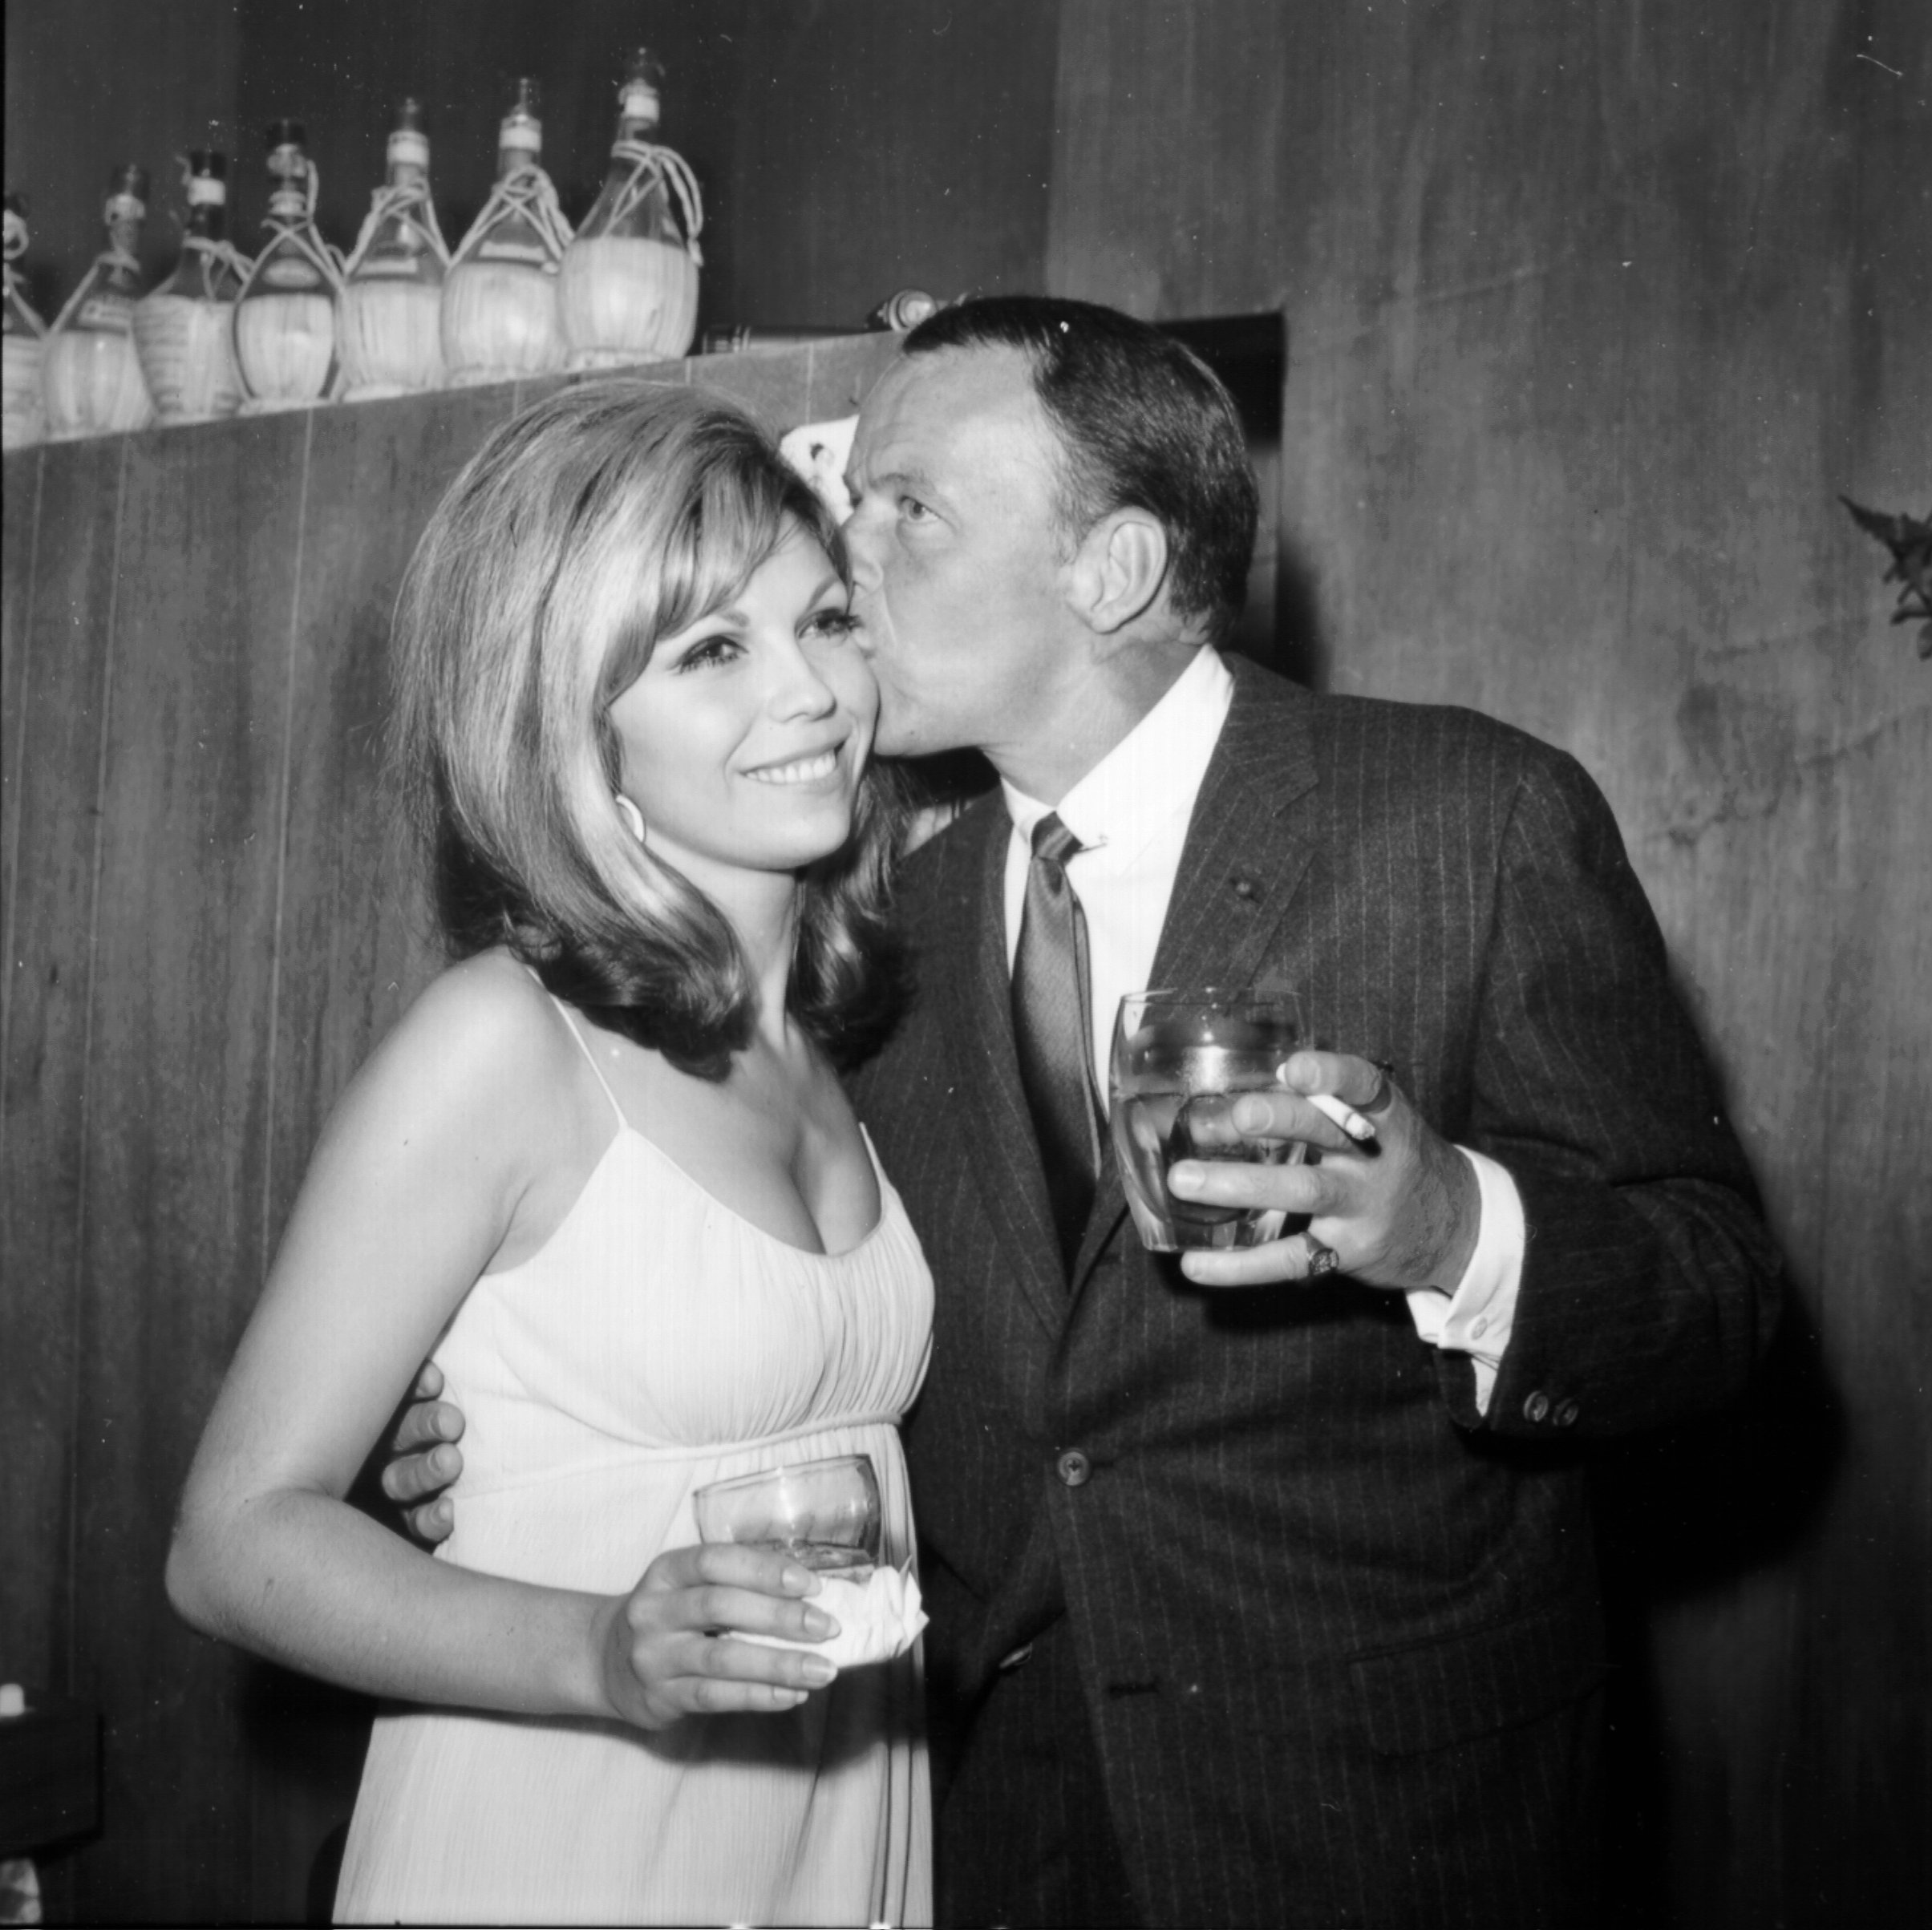 Frank Sinatra and Nancy Sinatra near bottles